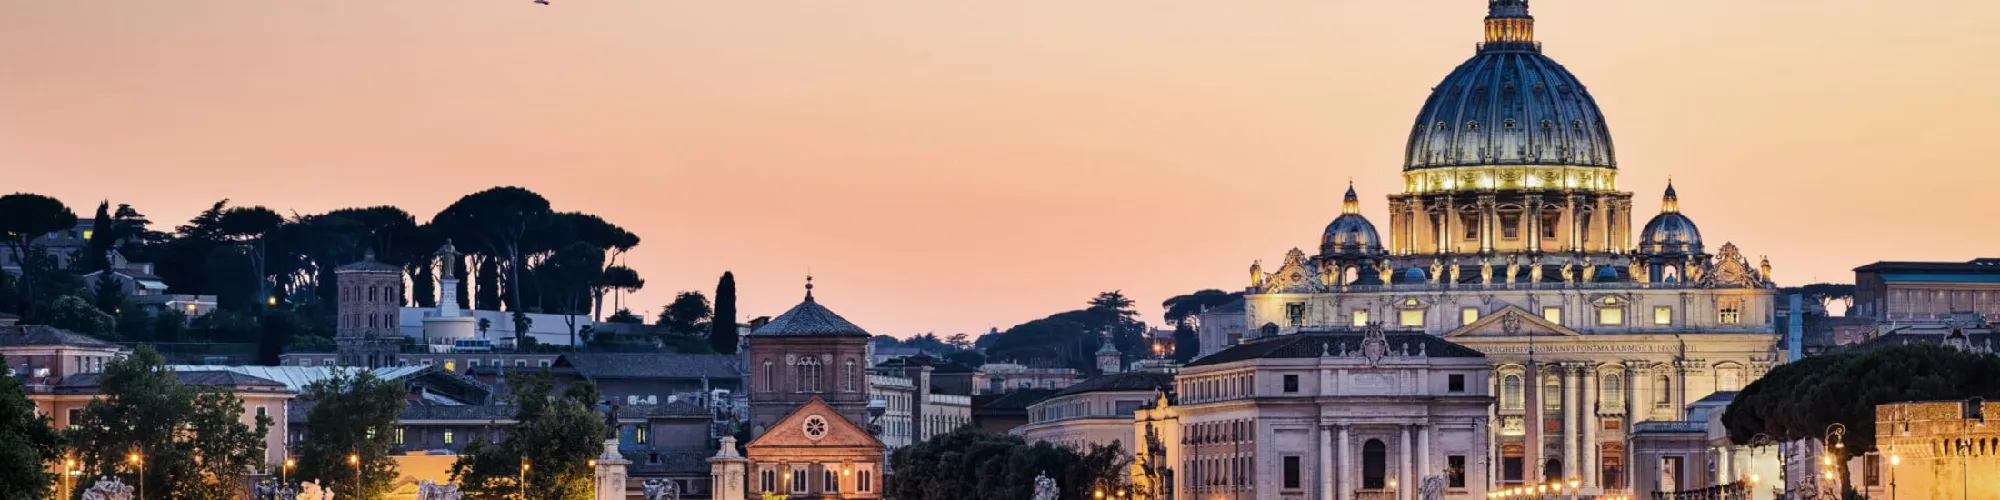 Städtereise Rom background image